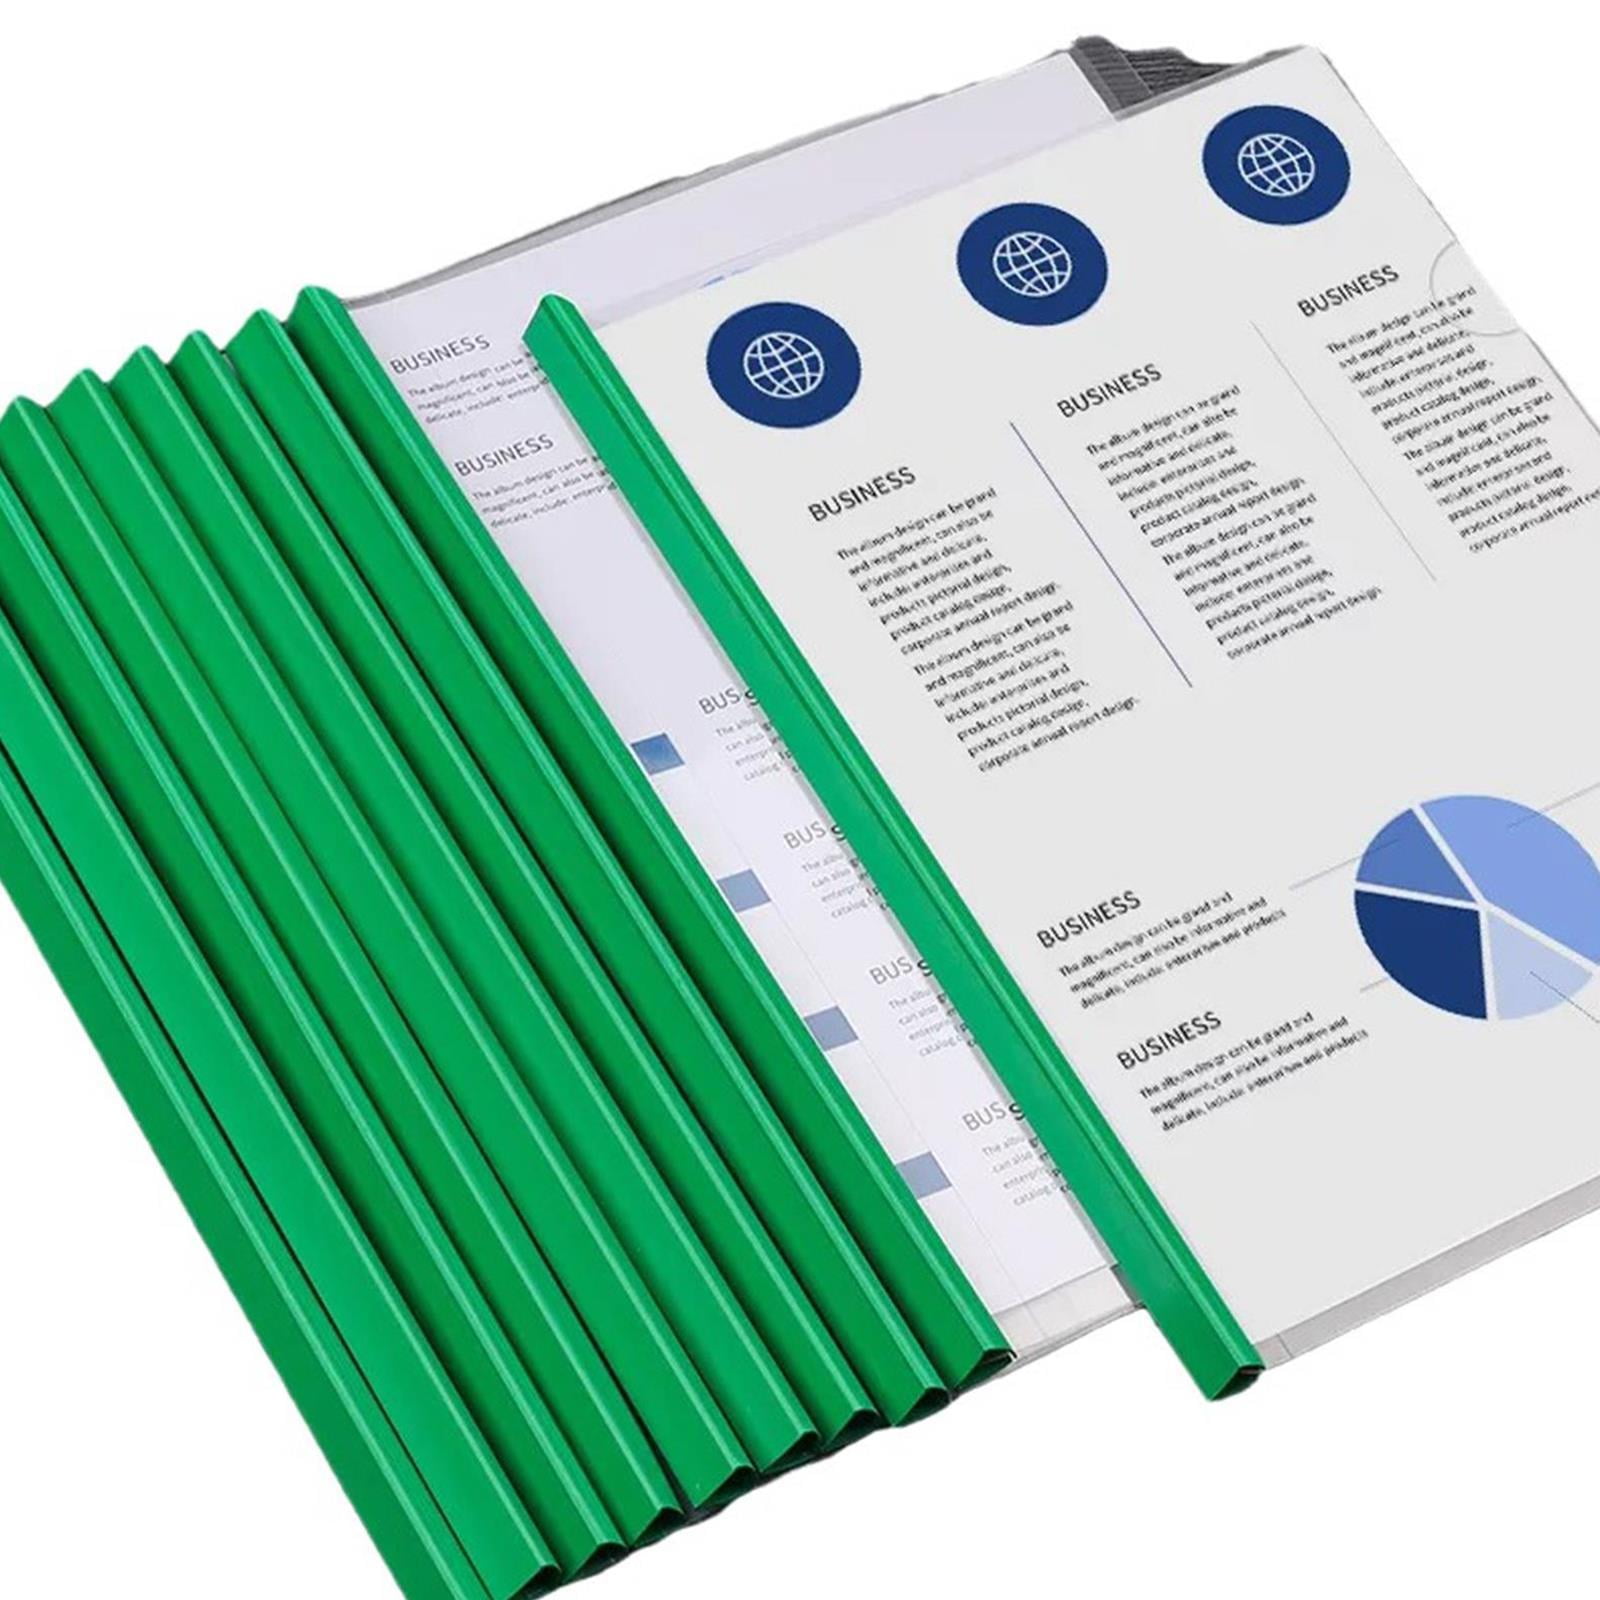 10 Pcs Clear A4 Slide Binder Folders, Sliding Bar Report Covers, Plastic  File Folder Project Presentation Covers, Organizer Slider Binder for Home  Office School Documents Classification (5 